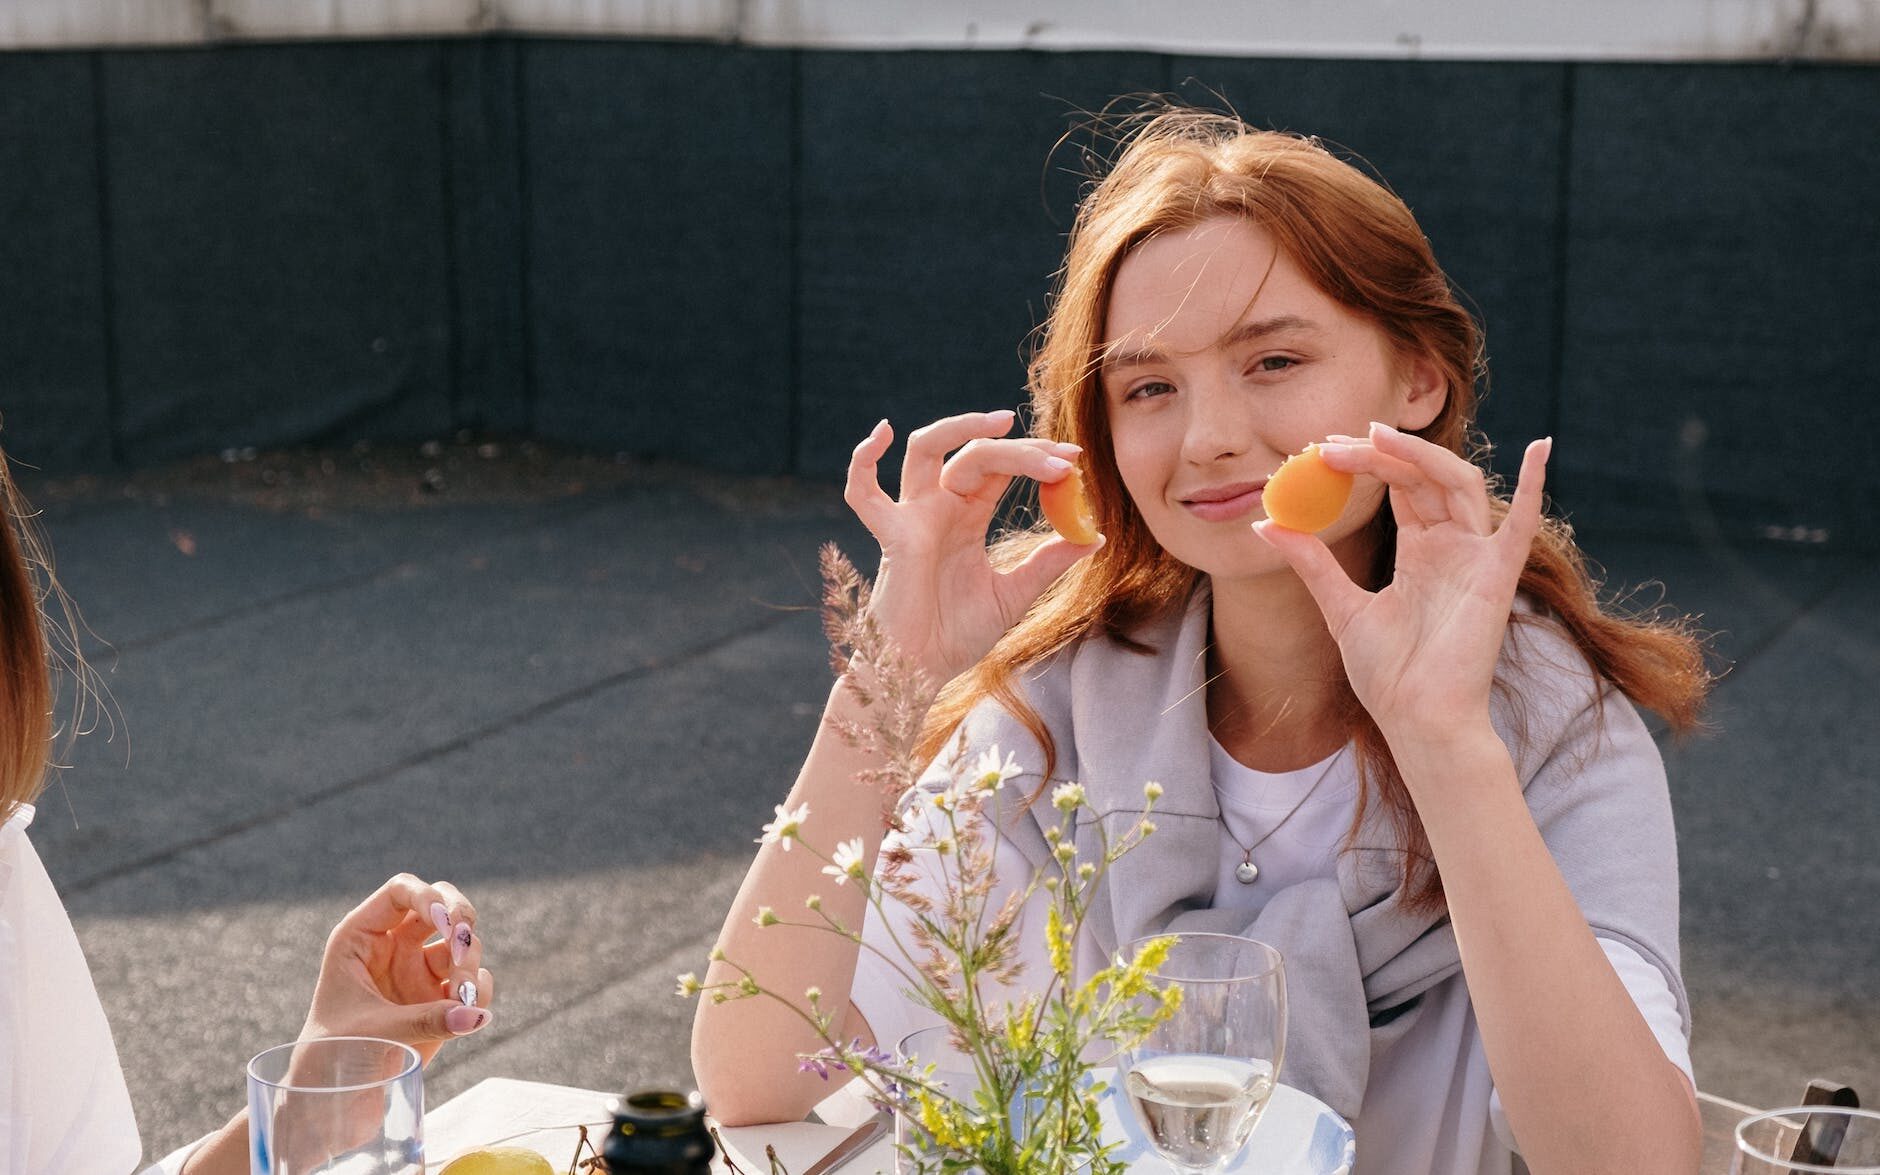 woman in white dress shirt holding orange fruit